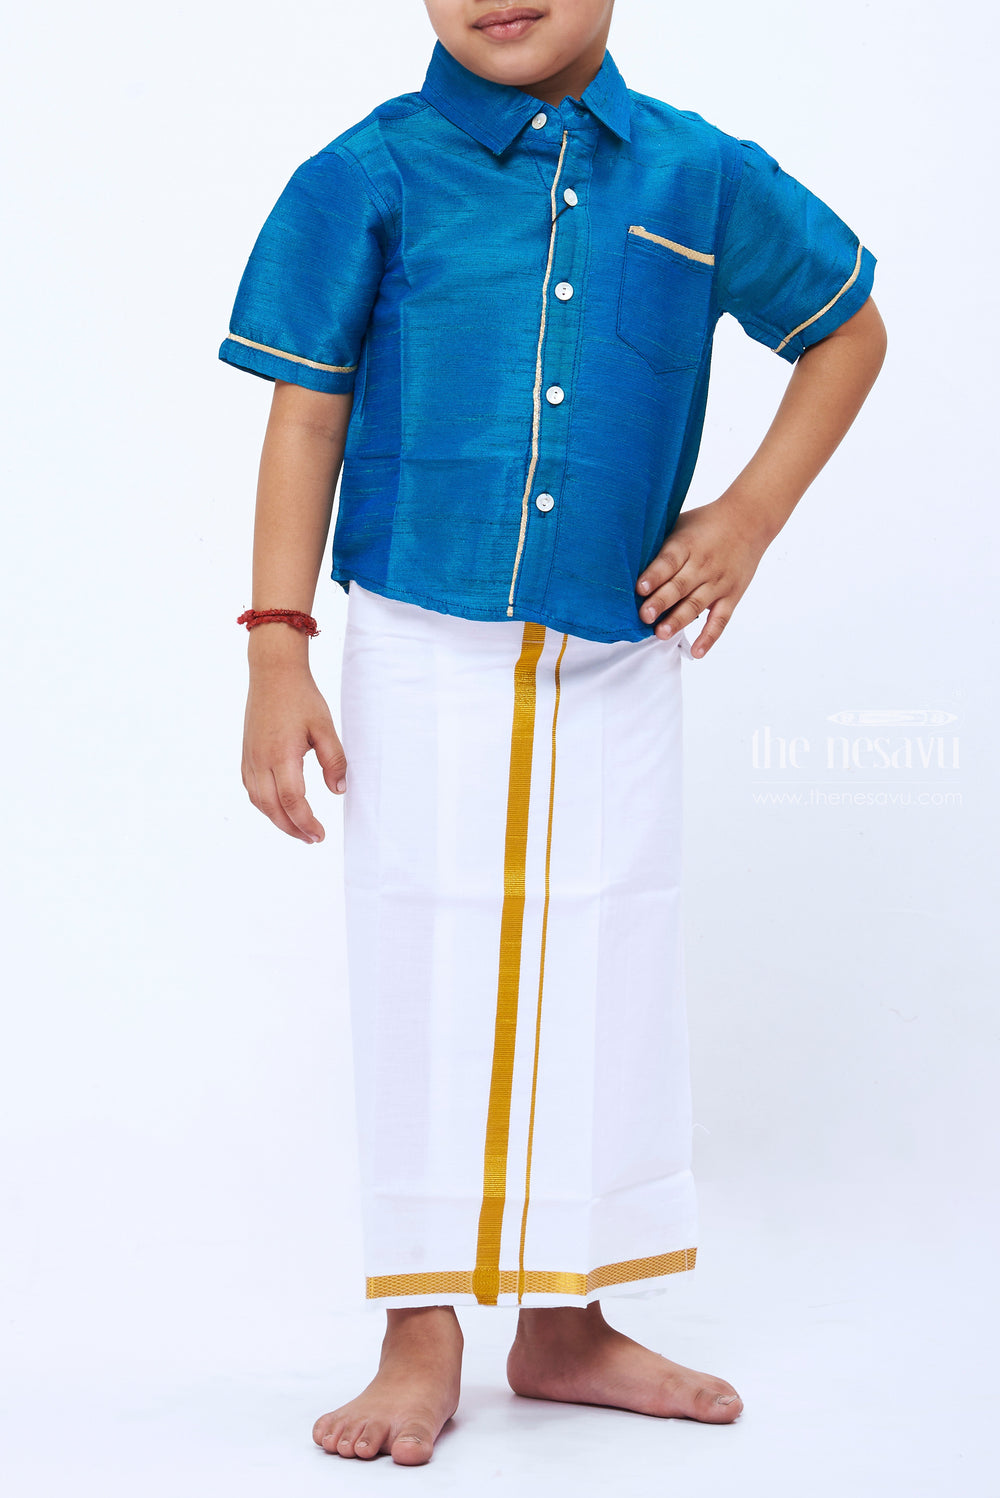 The Nesavu Boys Vesti Traditional Cotton Vesti for Boys Elegance in White and Gold Nesavu Boys White and Gold Traditional Vesti/Dothi | Ethnic Indian Clothing for Kids | The Nesavu